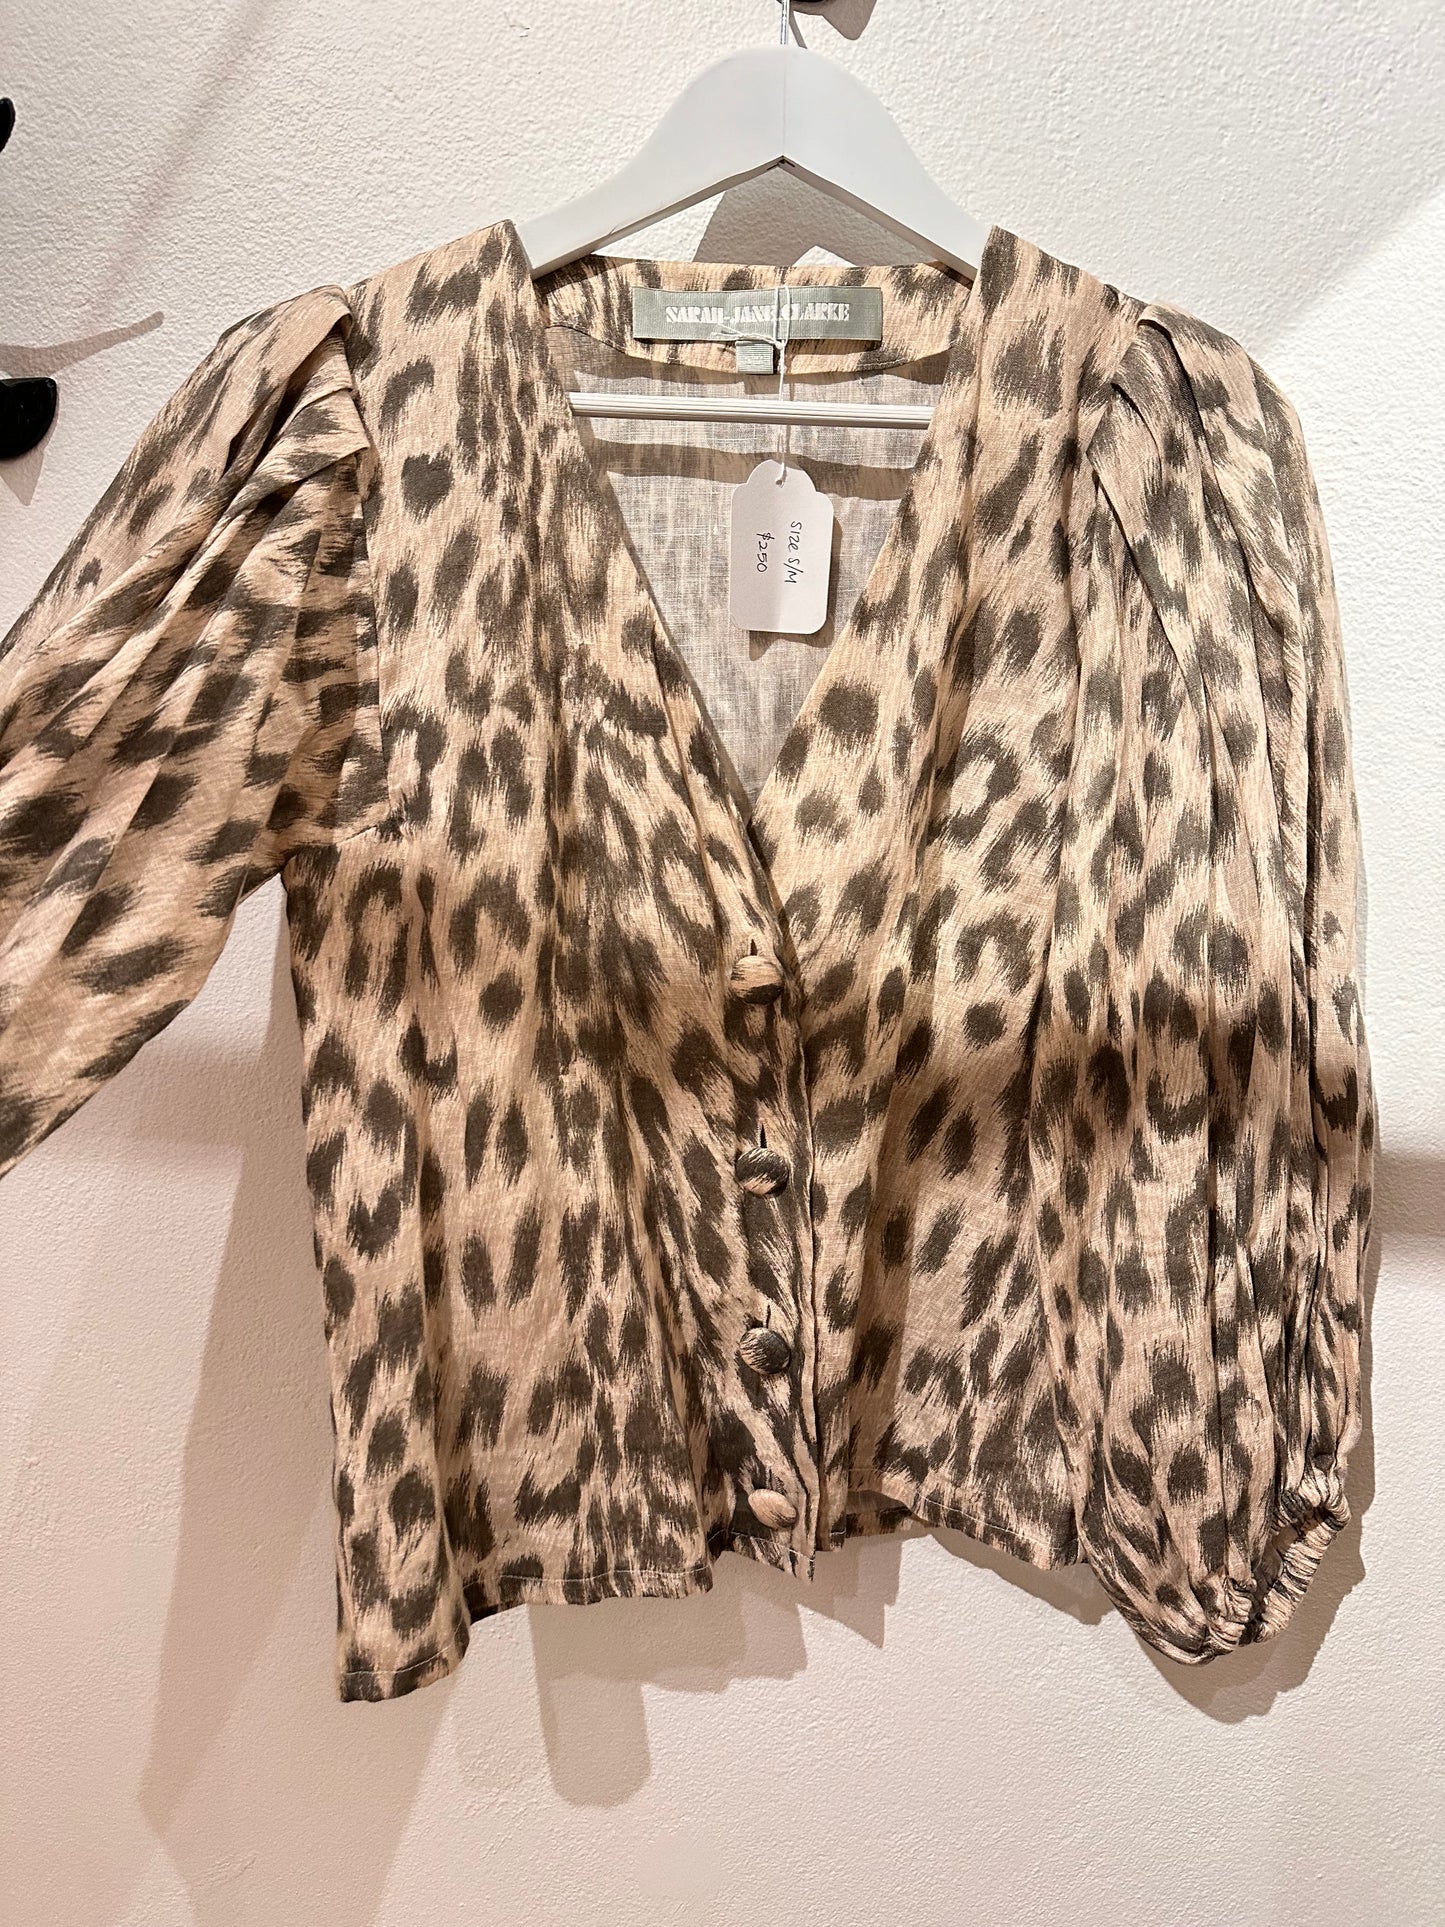 
                  
                    SARAH JANE CLARKE Leopard Jacket/Shirt S/M
                  
                